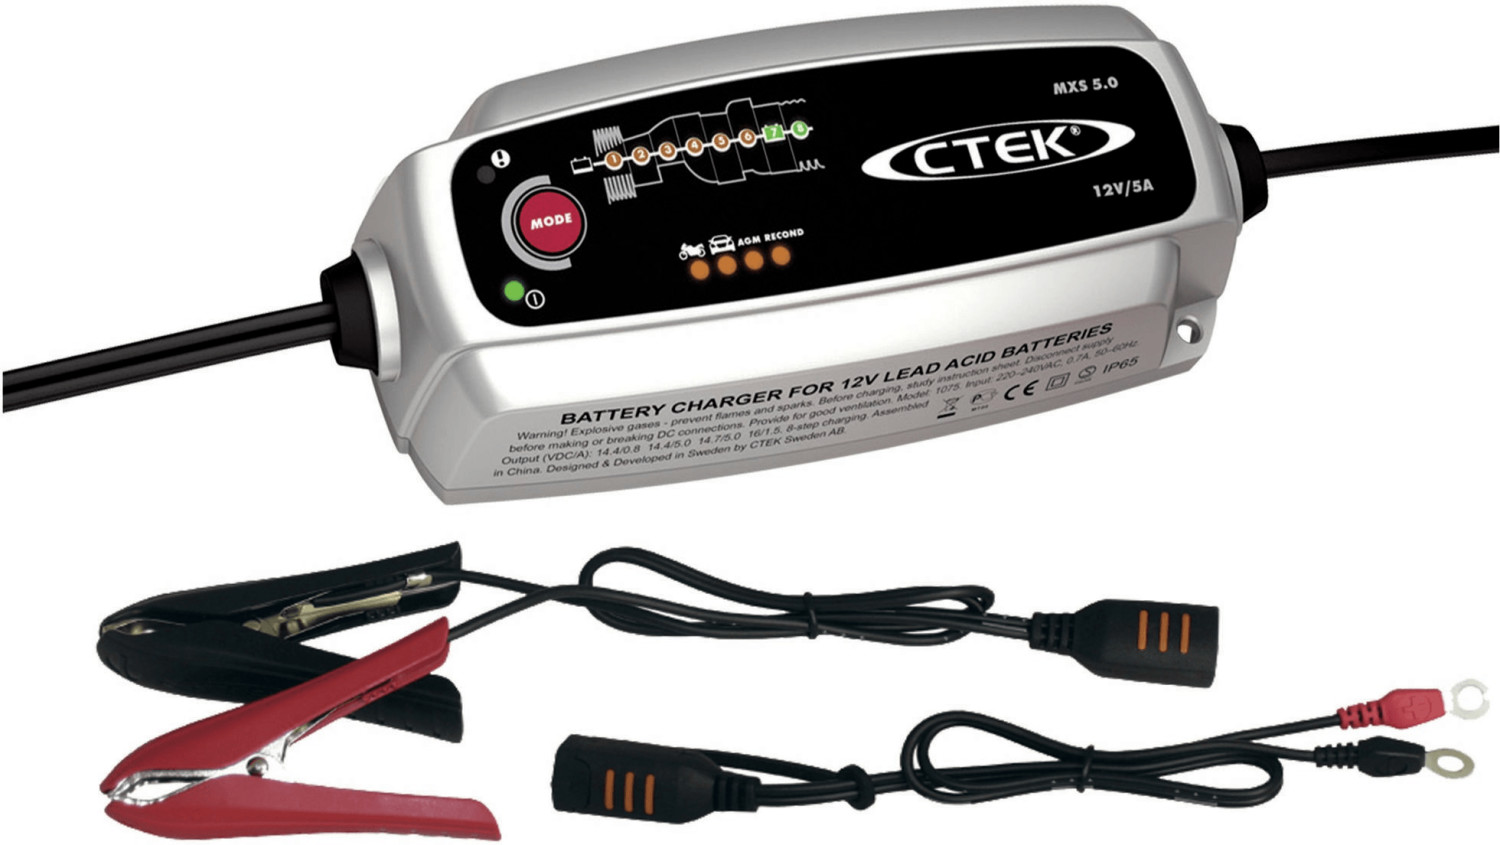 CTEK MXS 5.0 Batterieladegerät Auto PKW KFZ Motorrad Batterie Ladeger